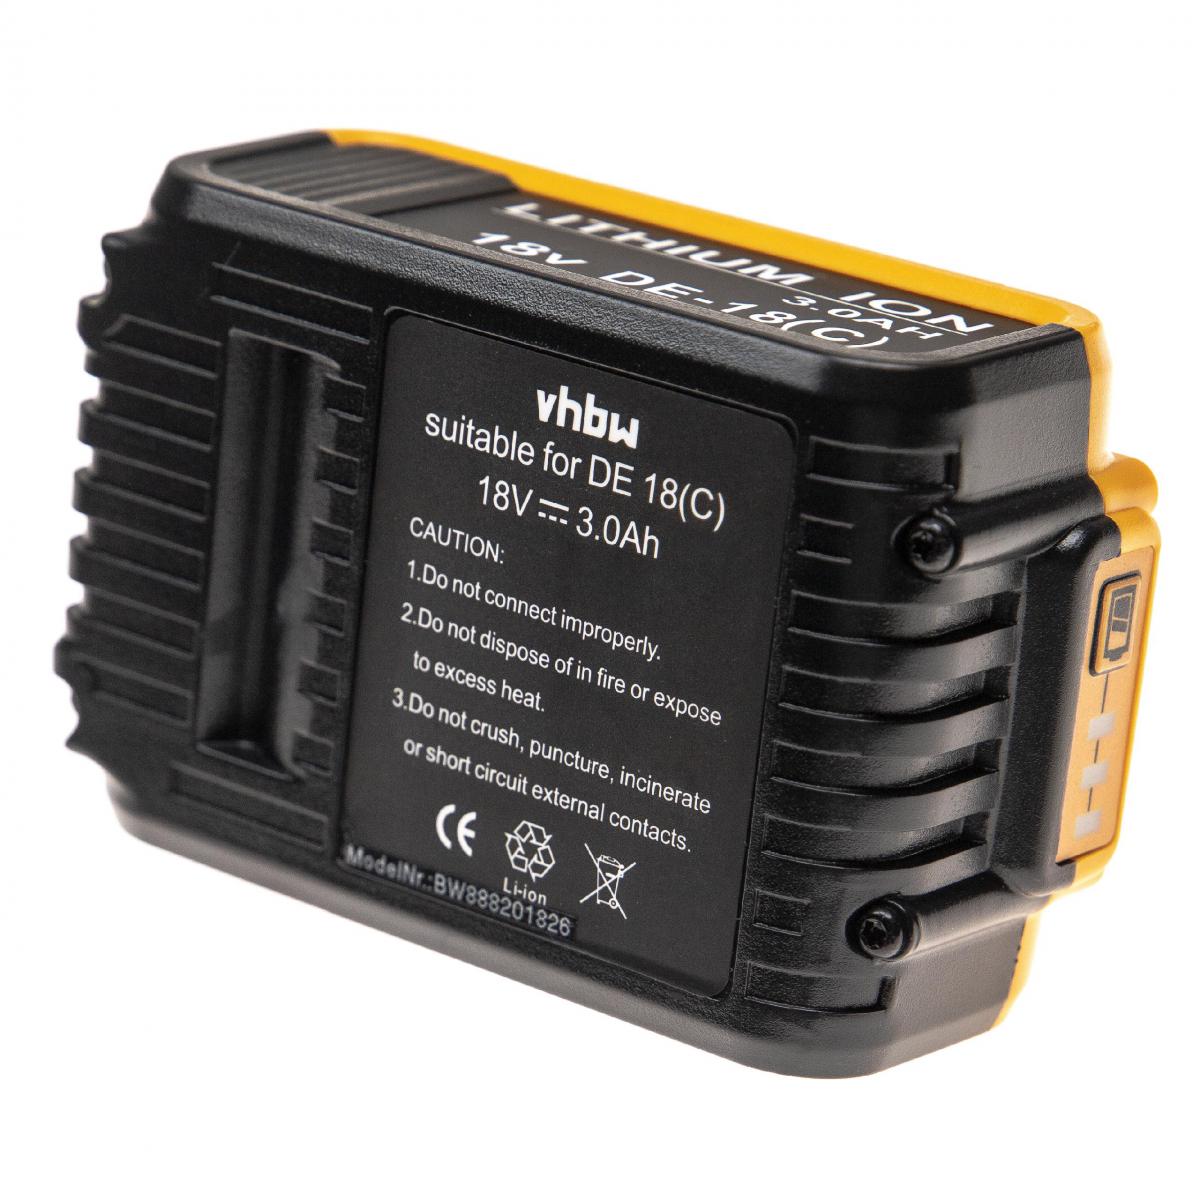 Vhbw - vhbw Batterie compatible avec Dewalt DCD980L2, DCD980M2, DCD985, DCD985B, DCD985L2, DCD985M2, DCD995 outil électrique (3000mAh Li-Ion 18V) - Clouterie